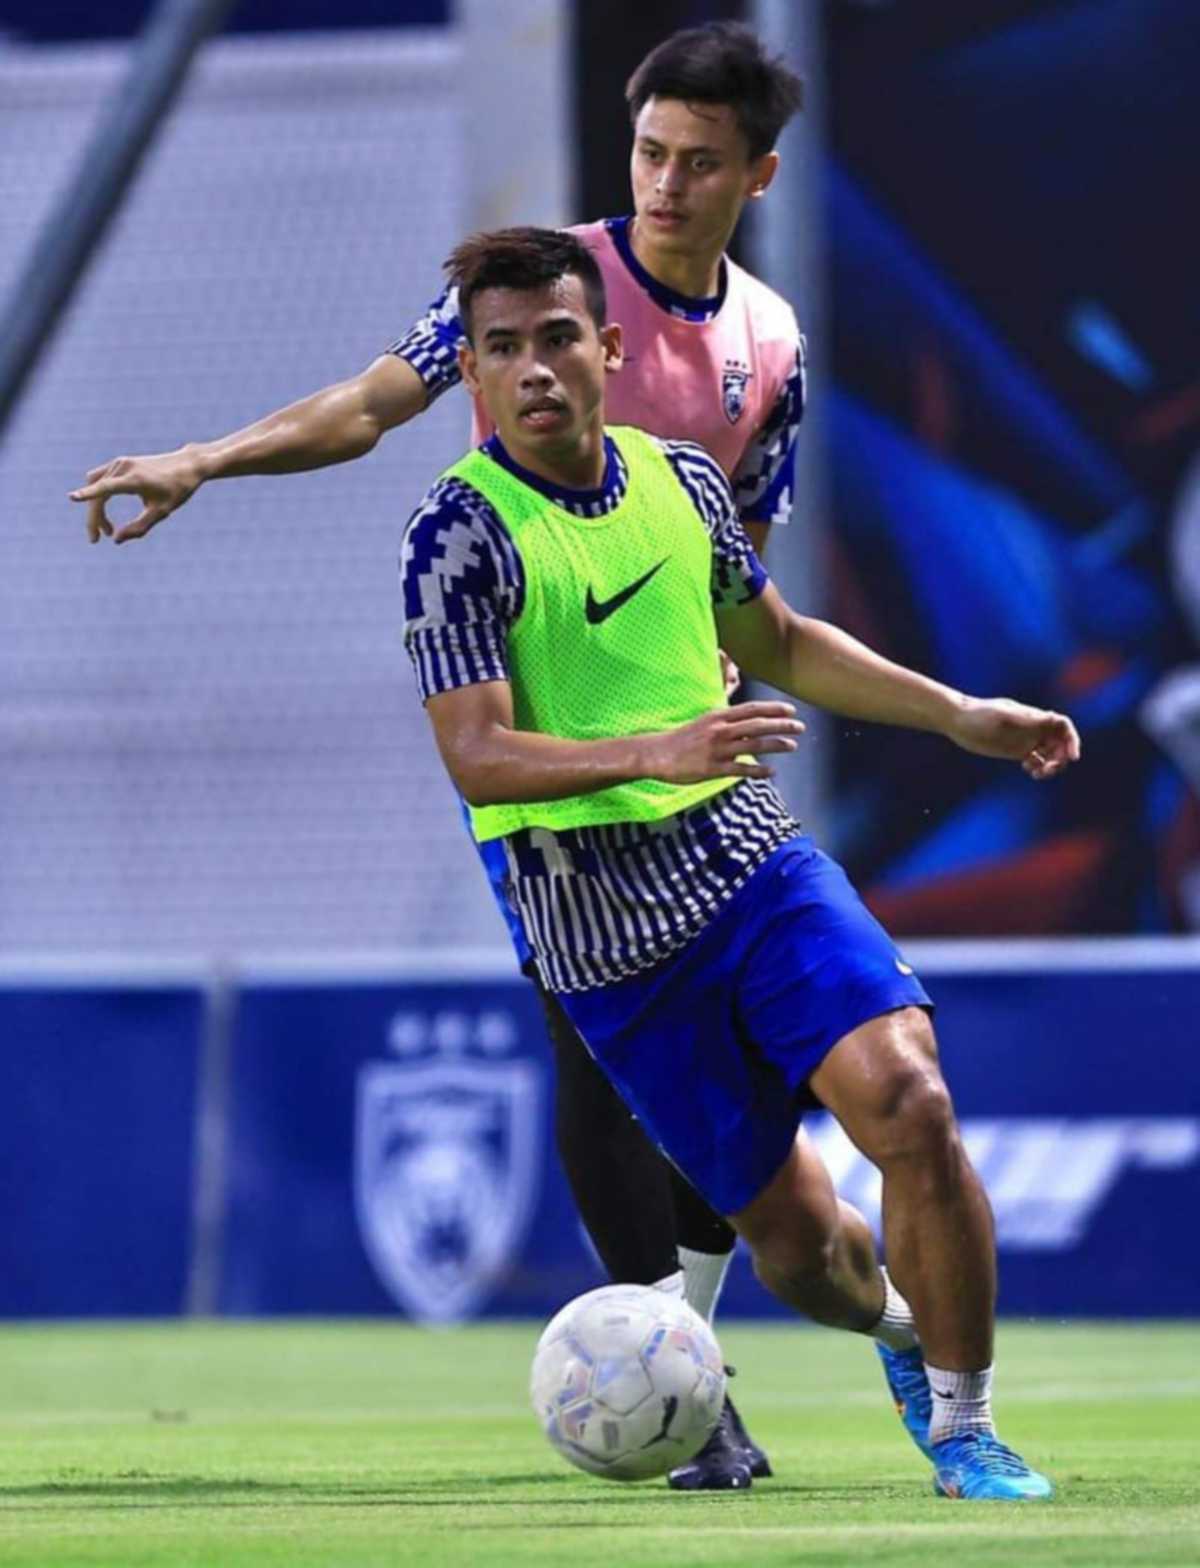 SAFAWI Rasid giat menjalani latihan bersam Feroz Baharuddin bagi persiapan menentang PJ City FC di Stadium Sultan Ibrahim, malam esok. FOTO Ihsan Johor Southern Tigers